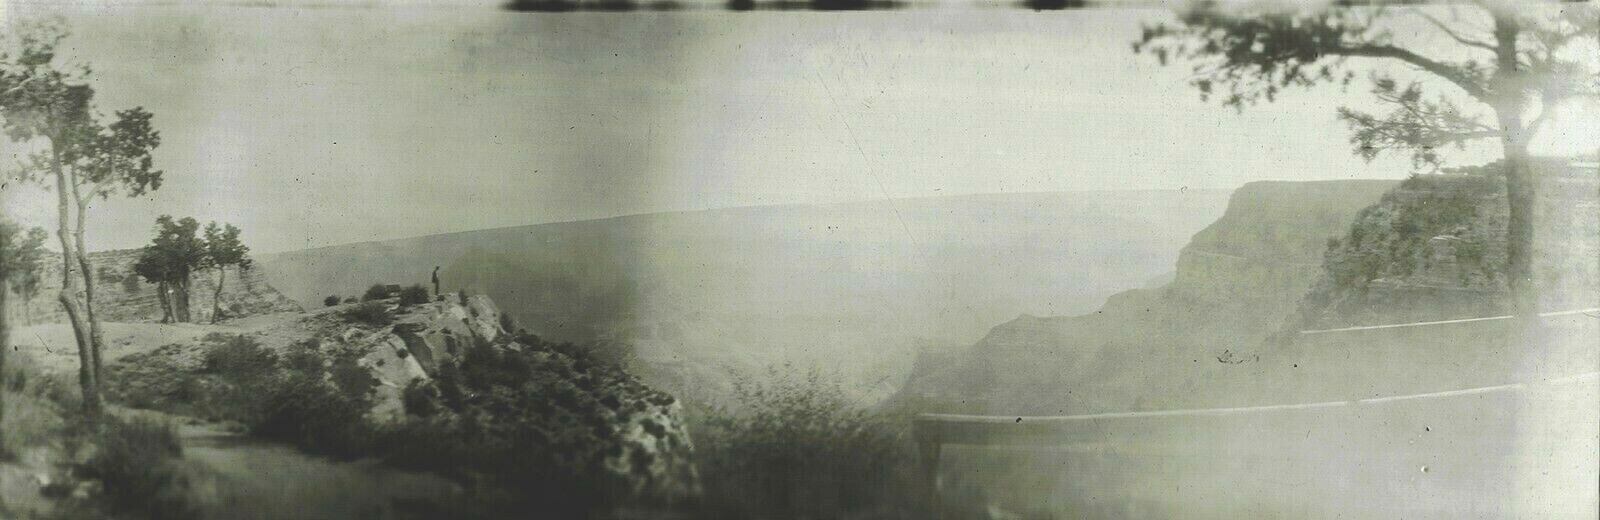 c1905 Grand Canyon Panoramic Photo Negative Man Rim Canyon, Pre National Park